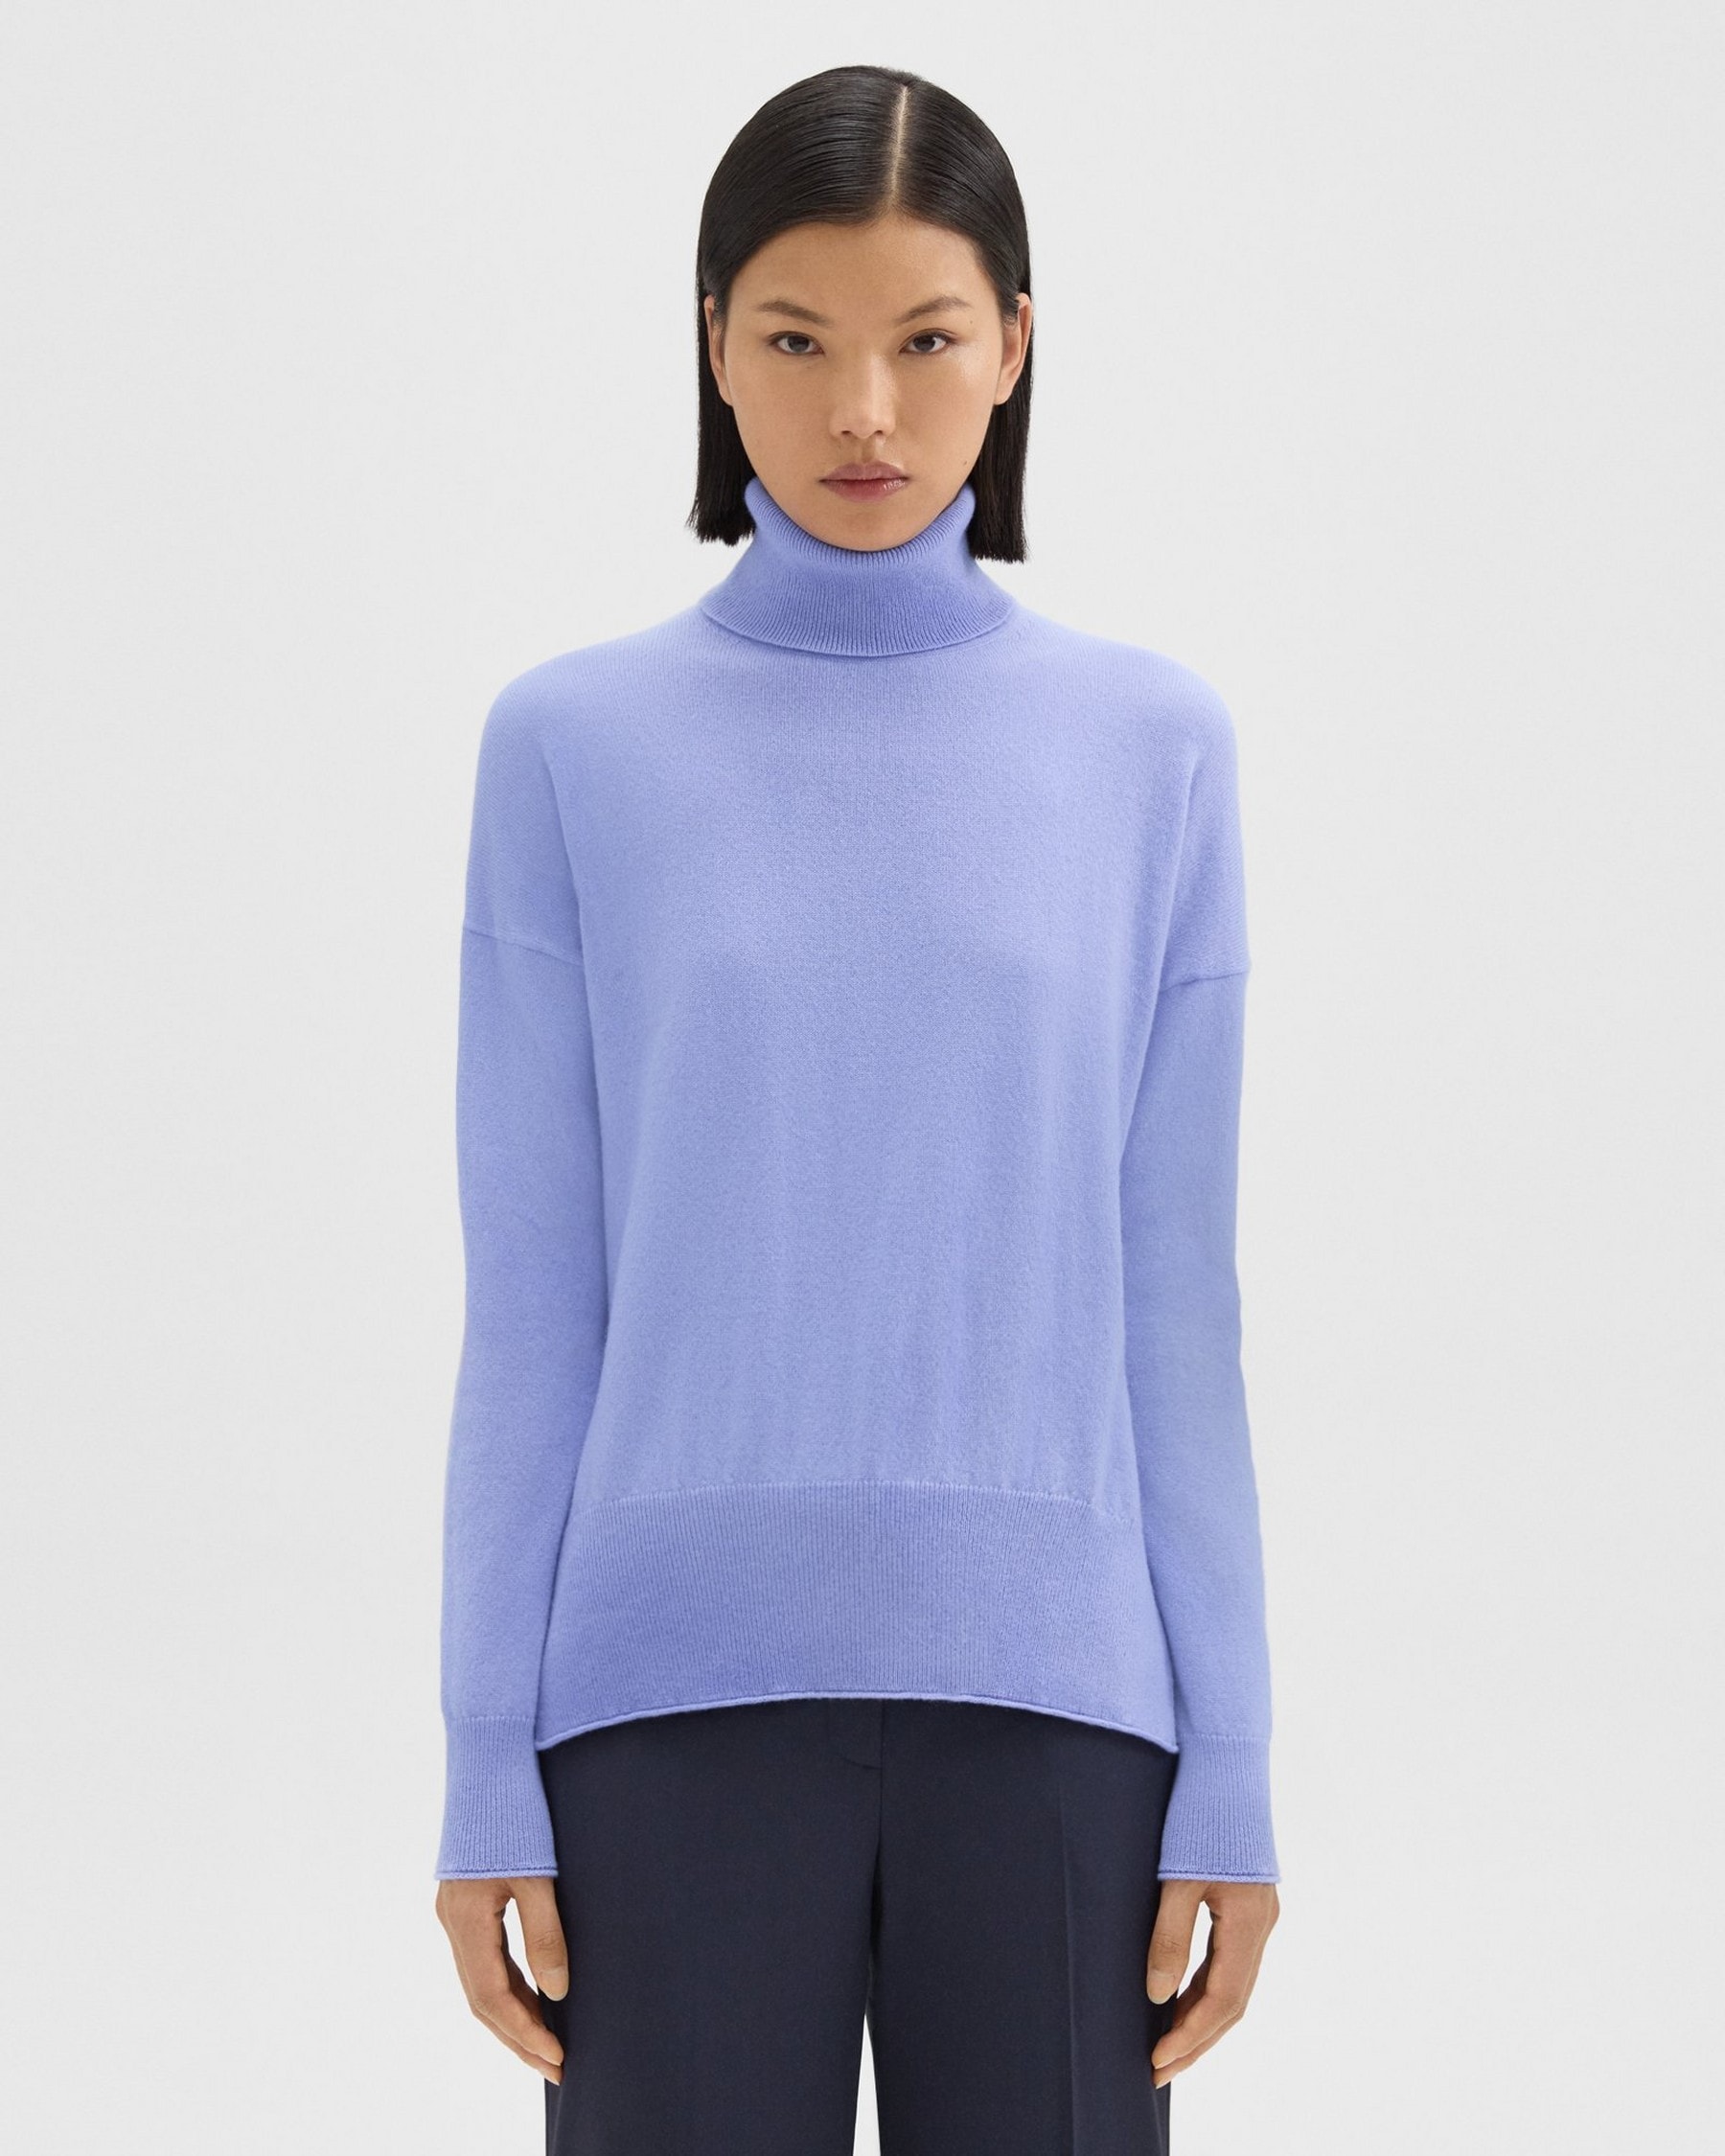 Theory Karenia Turtleneck Sweater in Cashmere